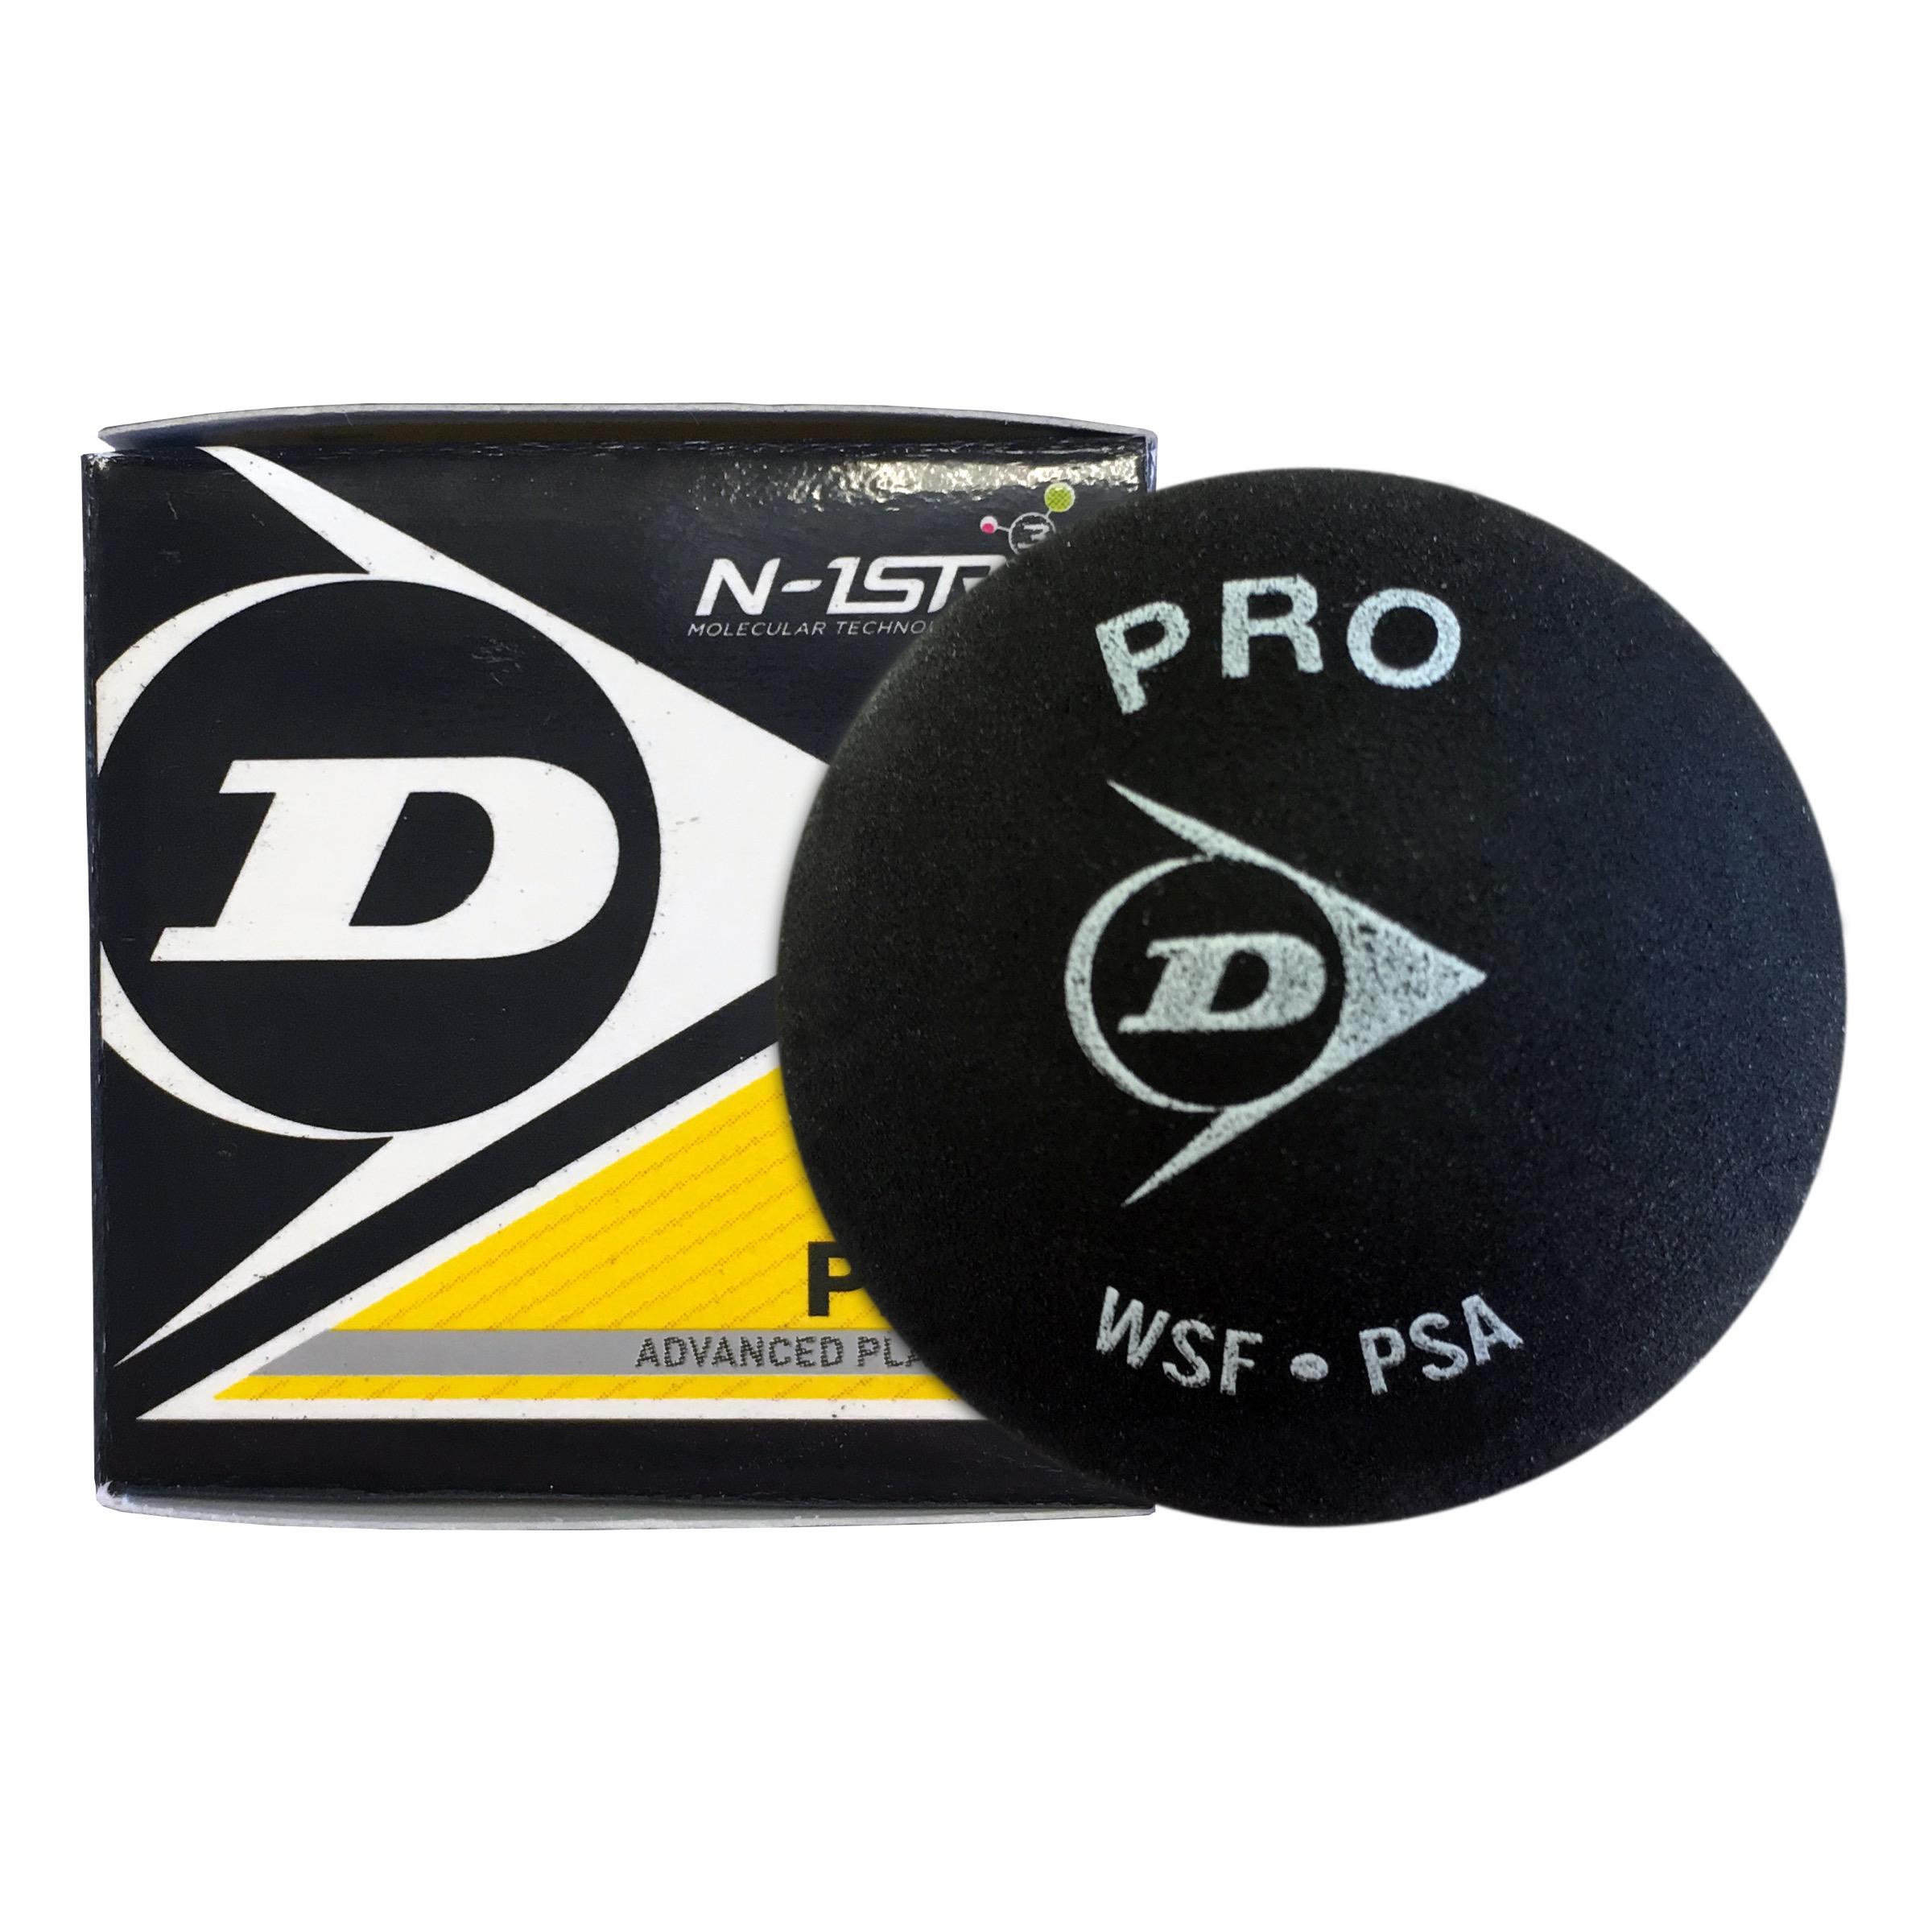 Dunlop Pro double yellow Zwei Dot Squash Ball Pack von 3 